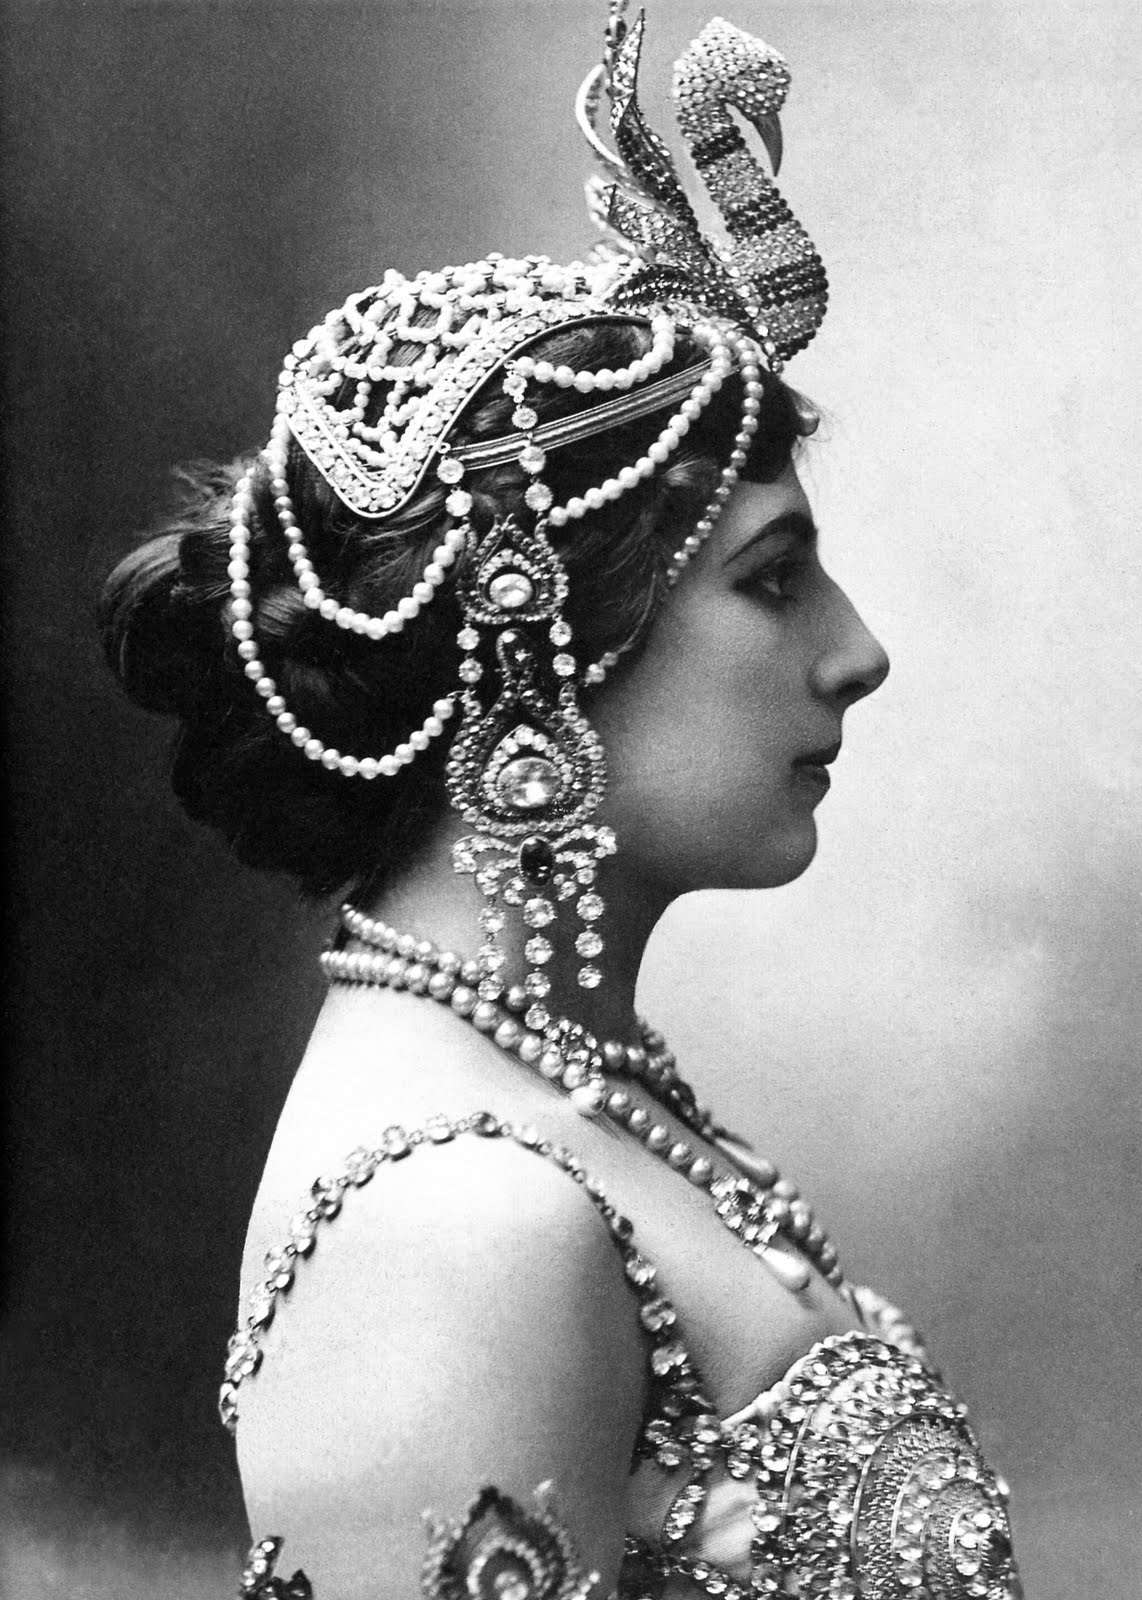 Scene India: Mata Hari - Mysterious life and death of a dancer